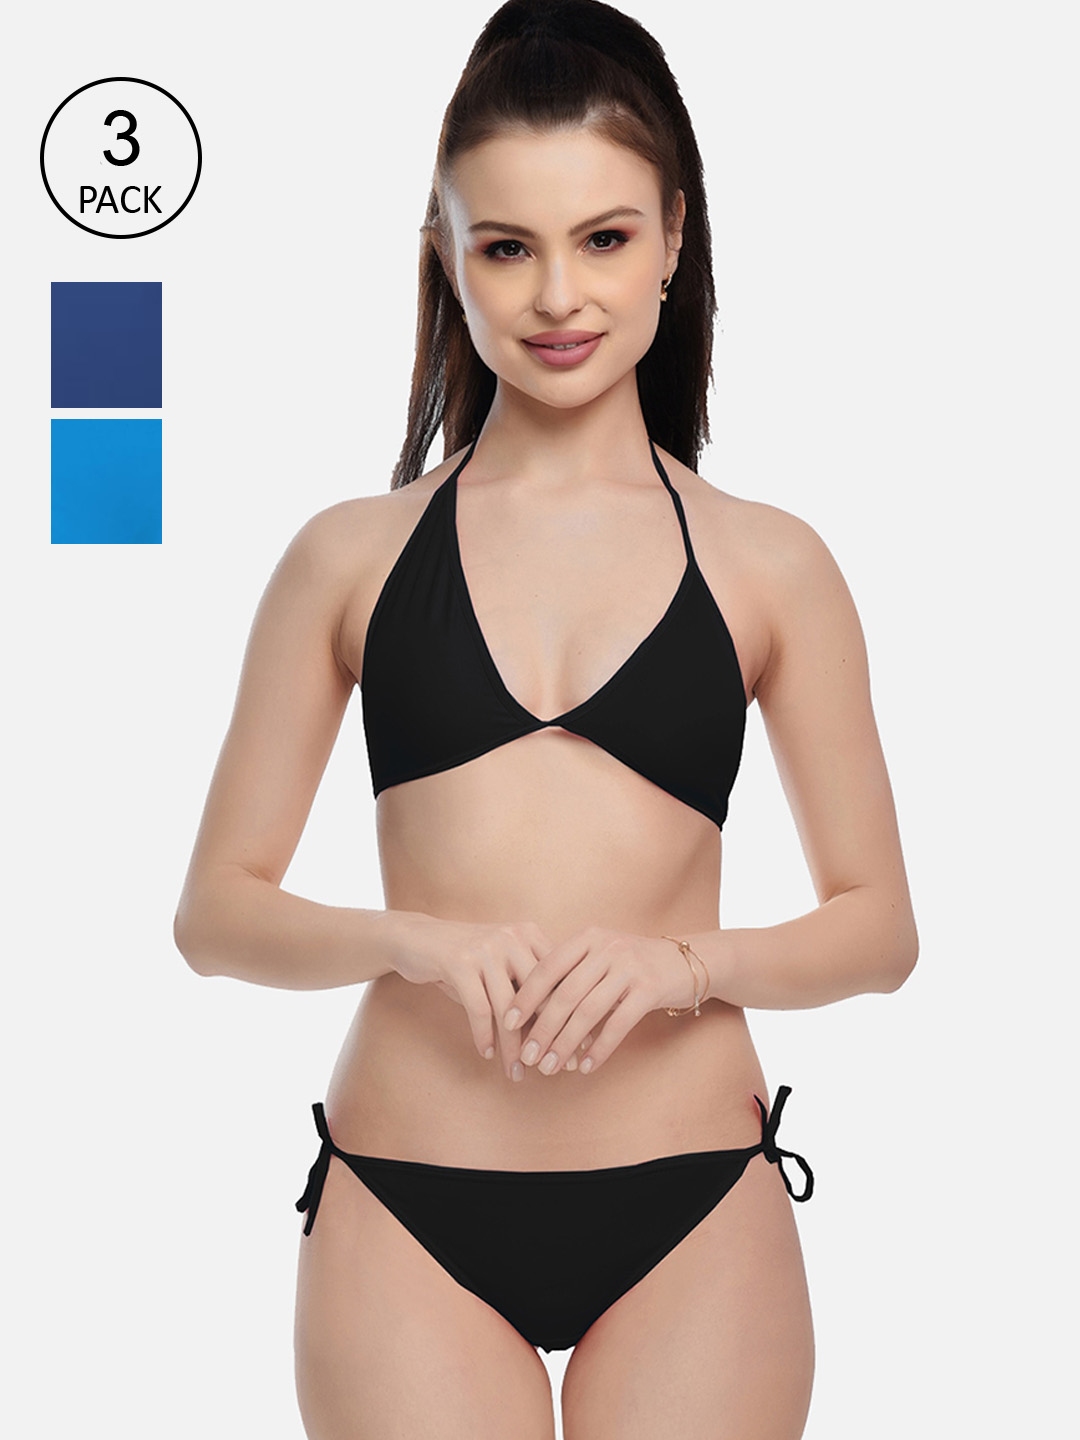 Buy Fims Women Pack Of 3 Black Blue And Navy Blue Solid Satin Bikini Lingerie Set Lingerie Set